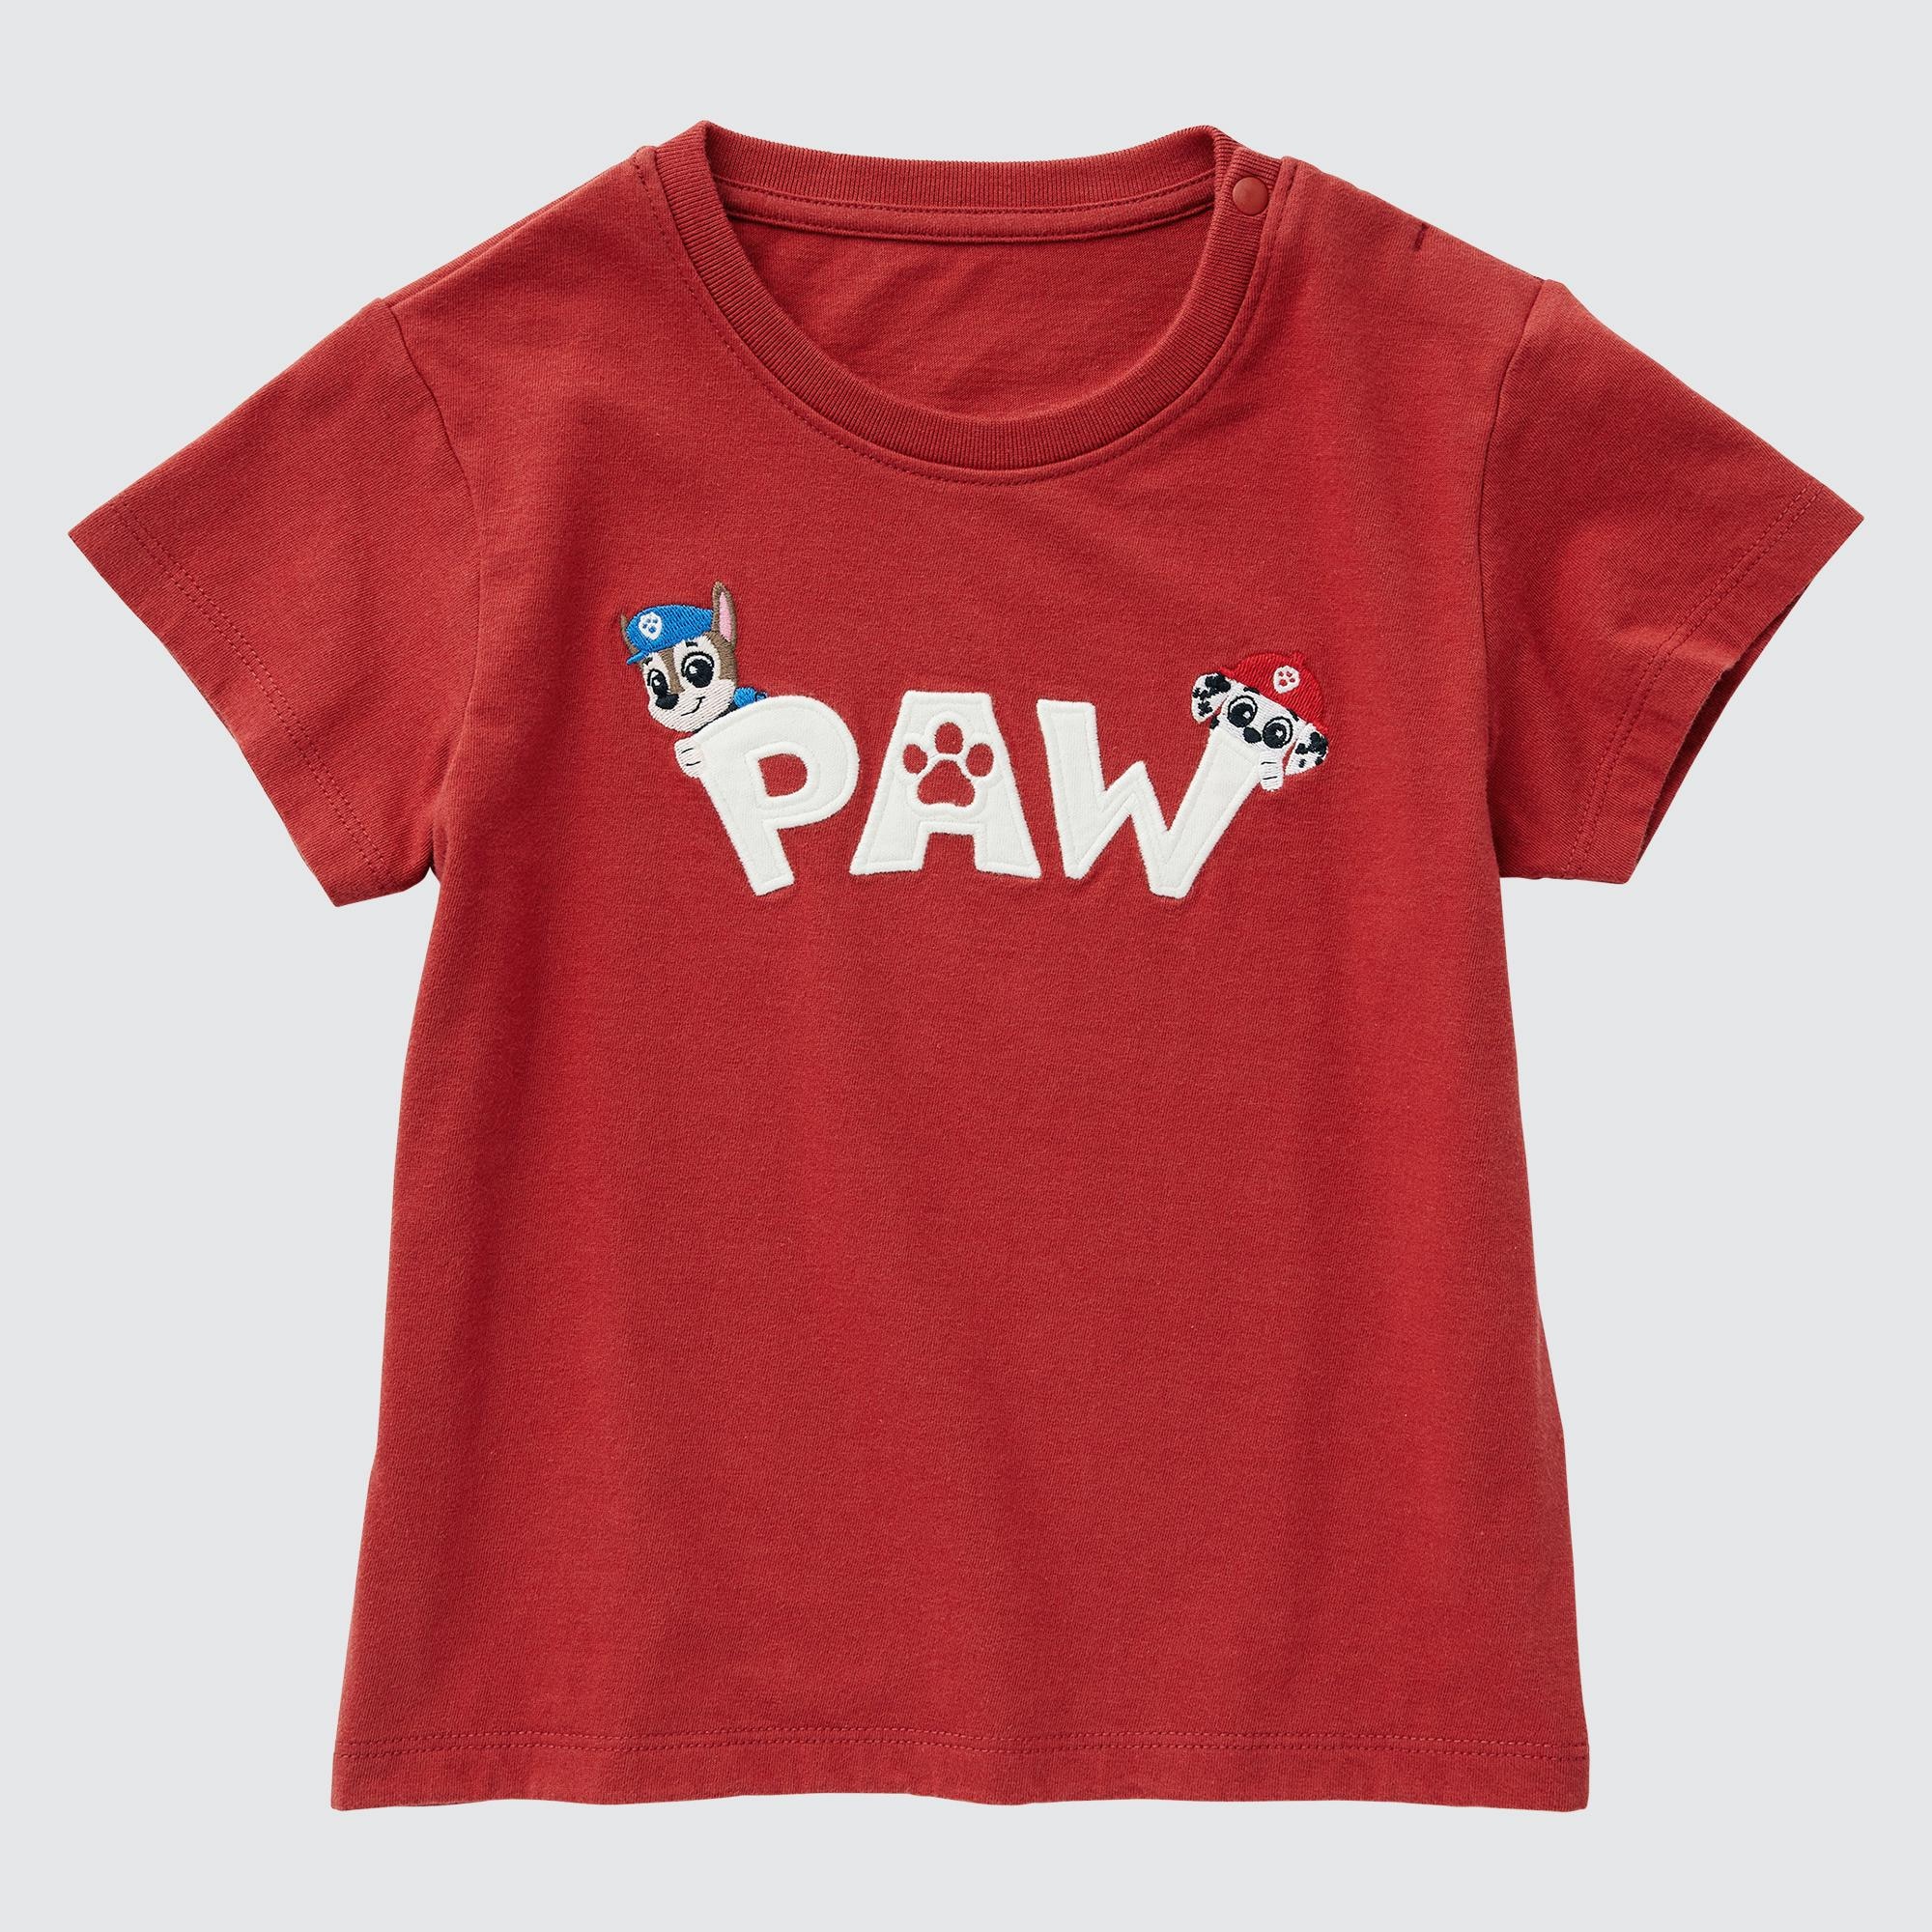 PAW Patrol T-Shirt) UNIQLO Graphic US UT Sleeve (Short 